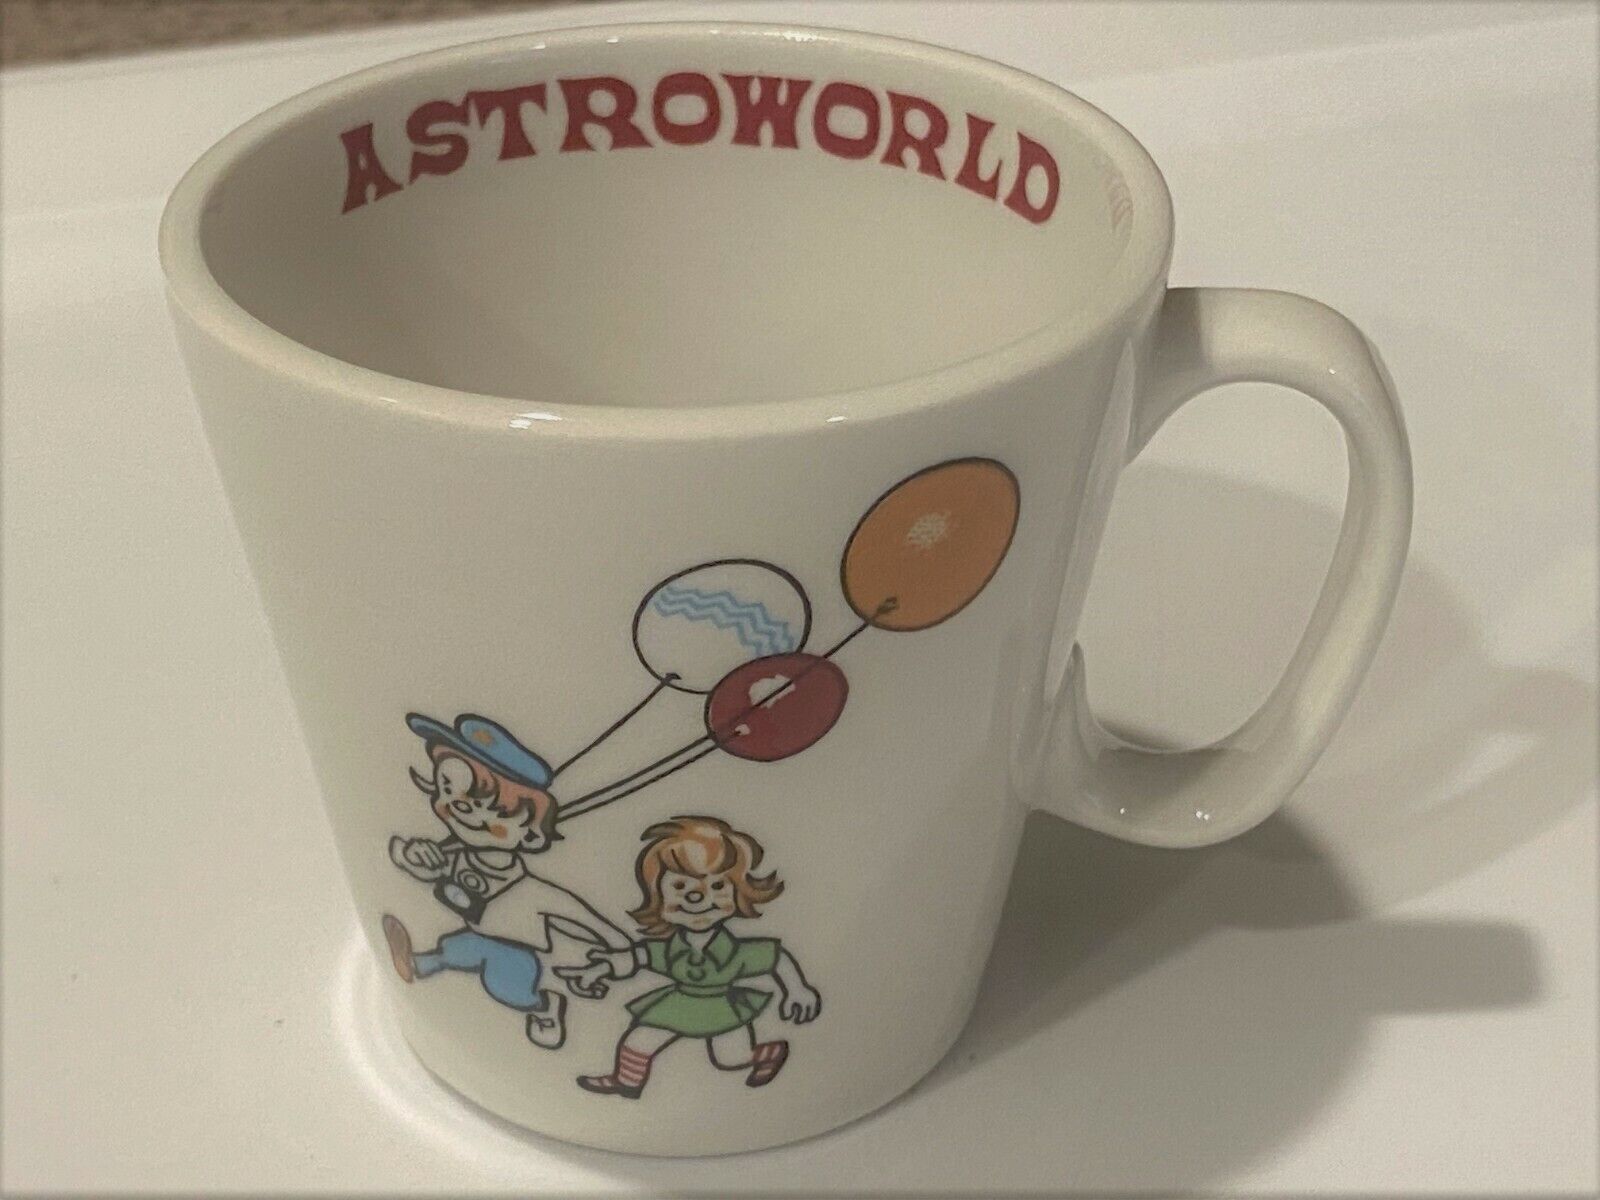  Astroworld vintage ceramic cup, ORIGINAL, great design, NEAR MINT, Houston, TX